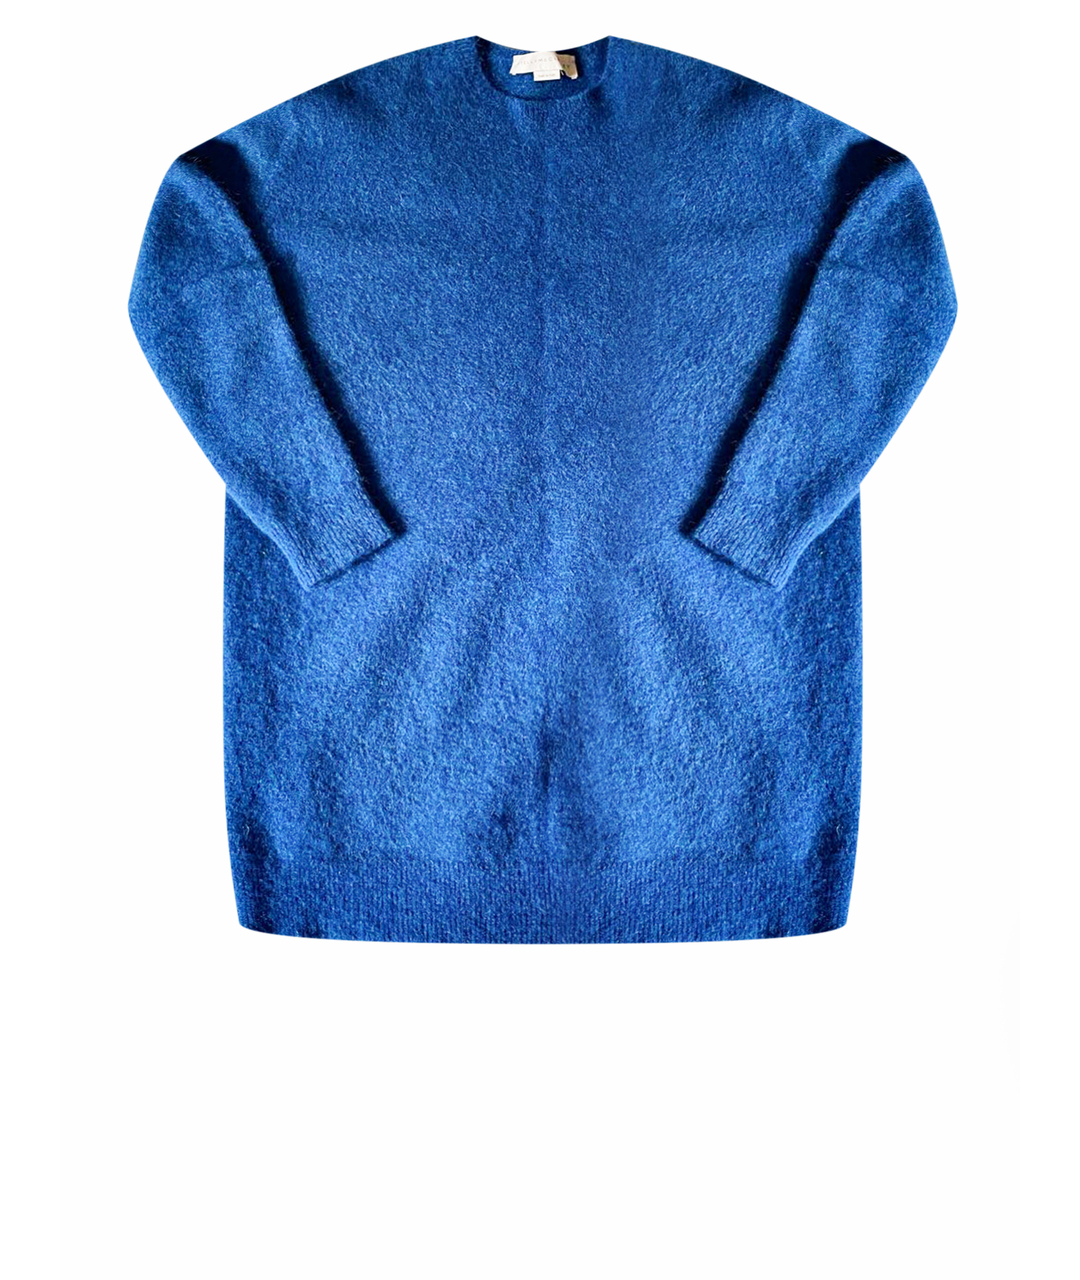 STELLA MCCARTNEY Синий шерстяной джемпер / свитер, фото 1